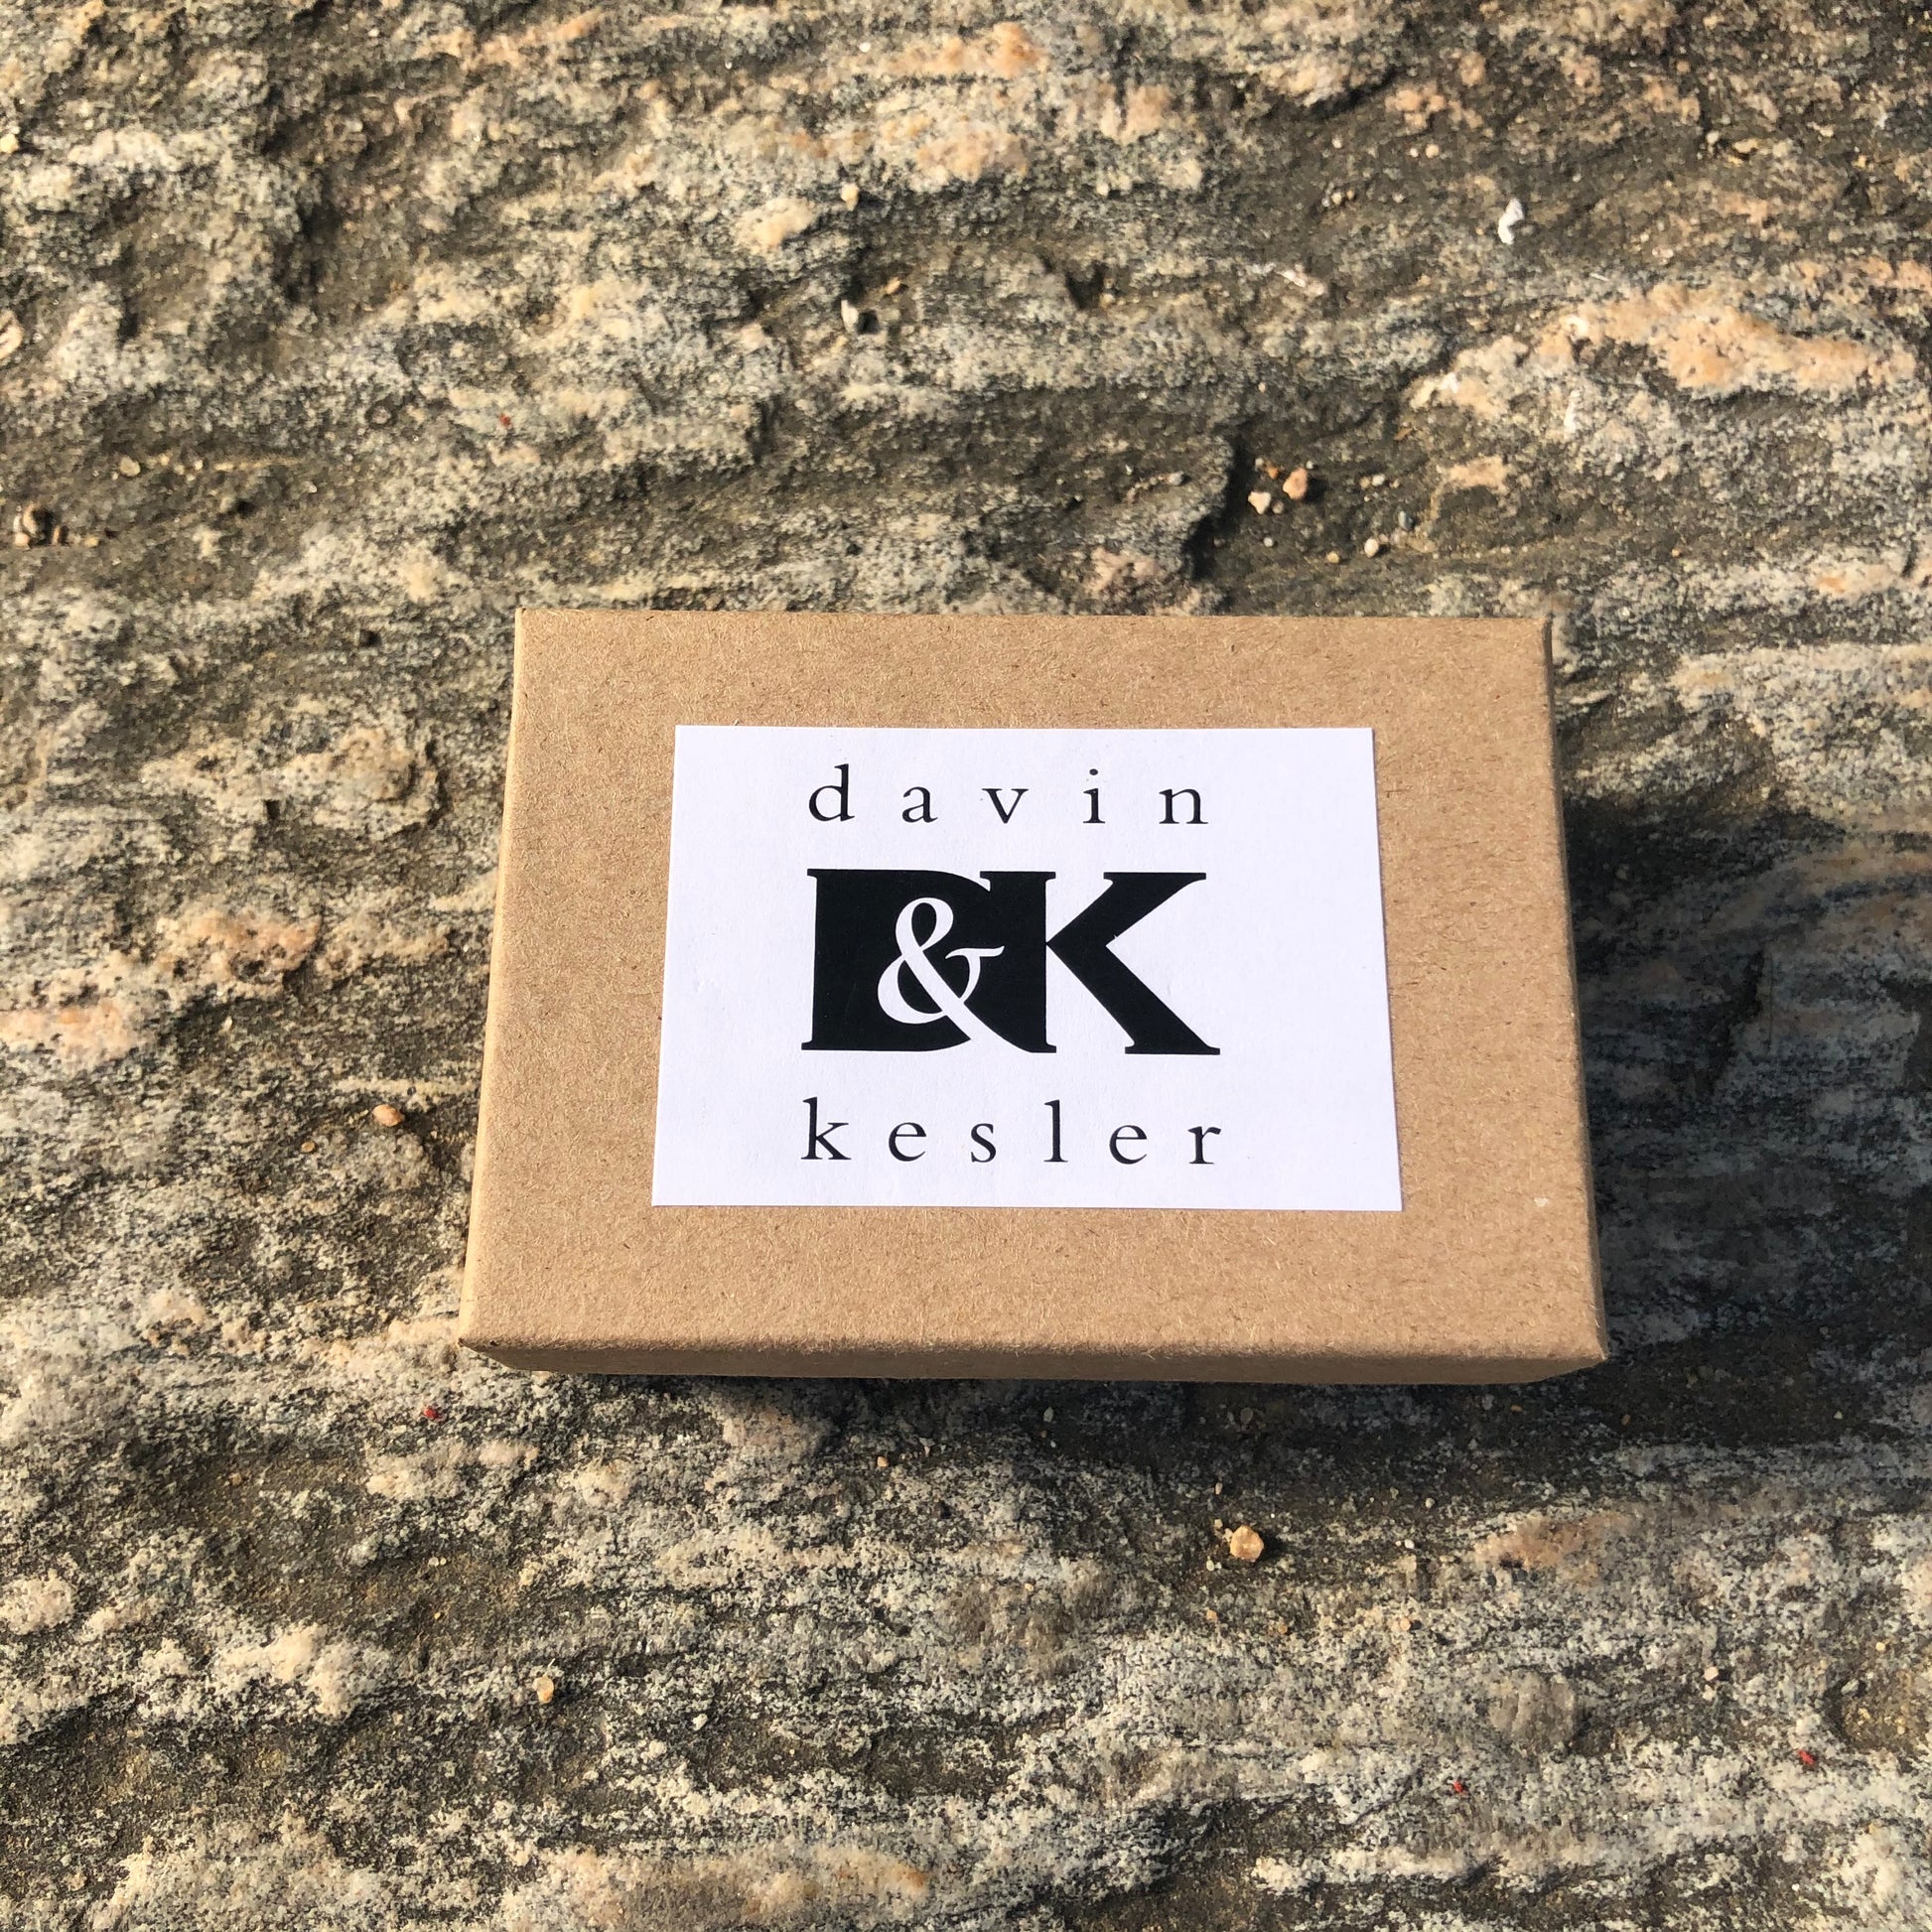 Davin and Kesler gift box